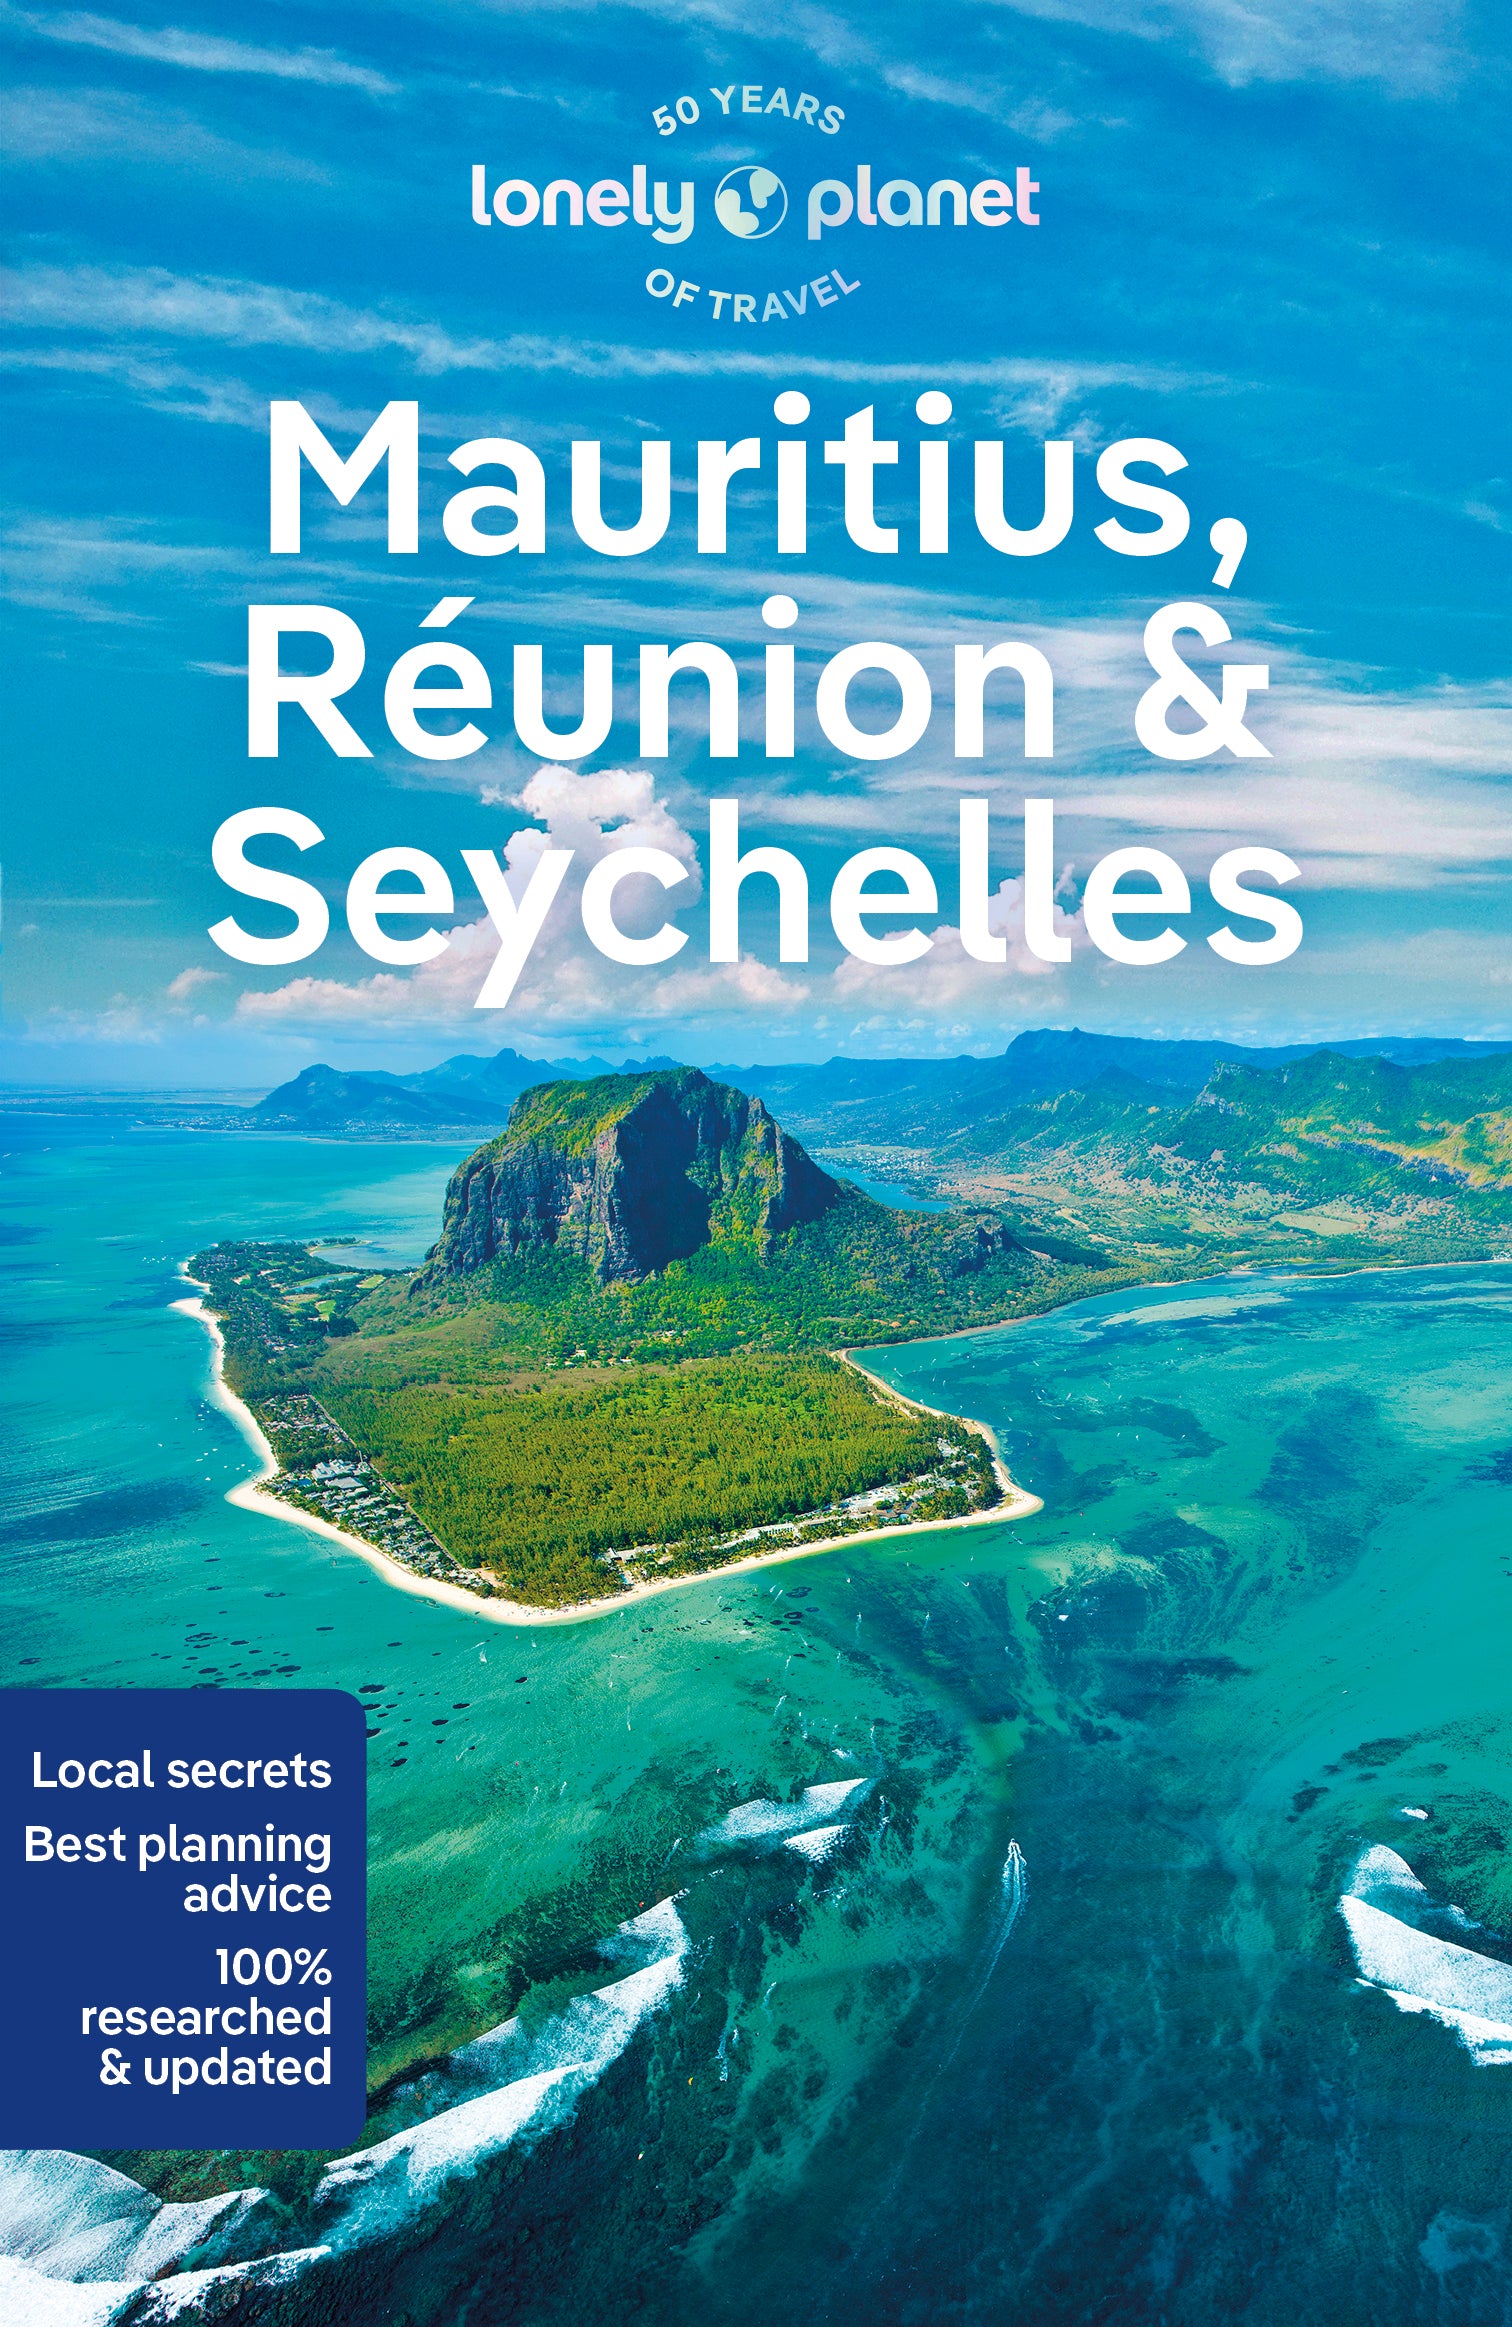 Mauritius, Reunion & Seychelles Travel Book and eBook